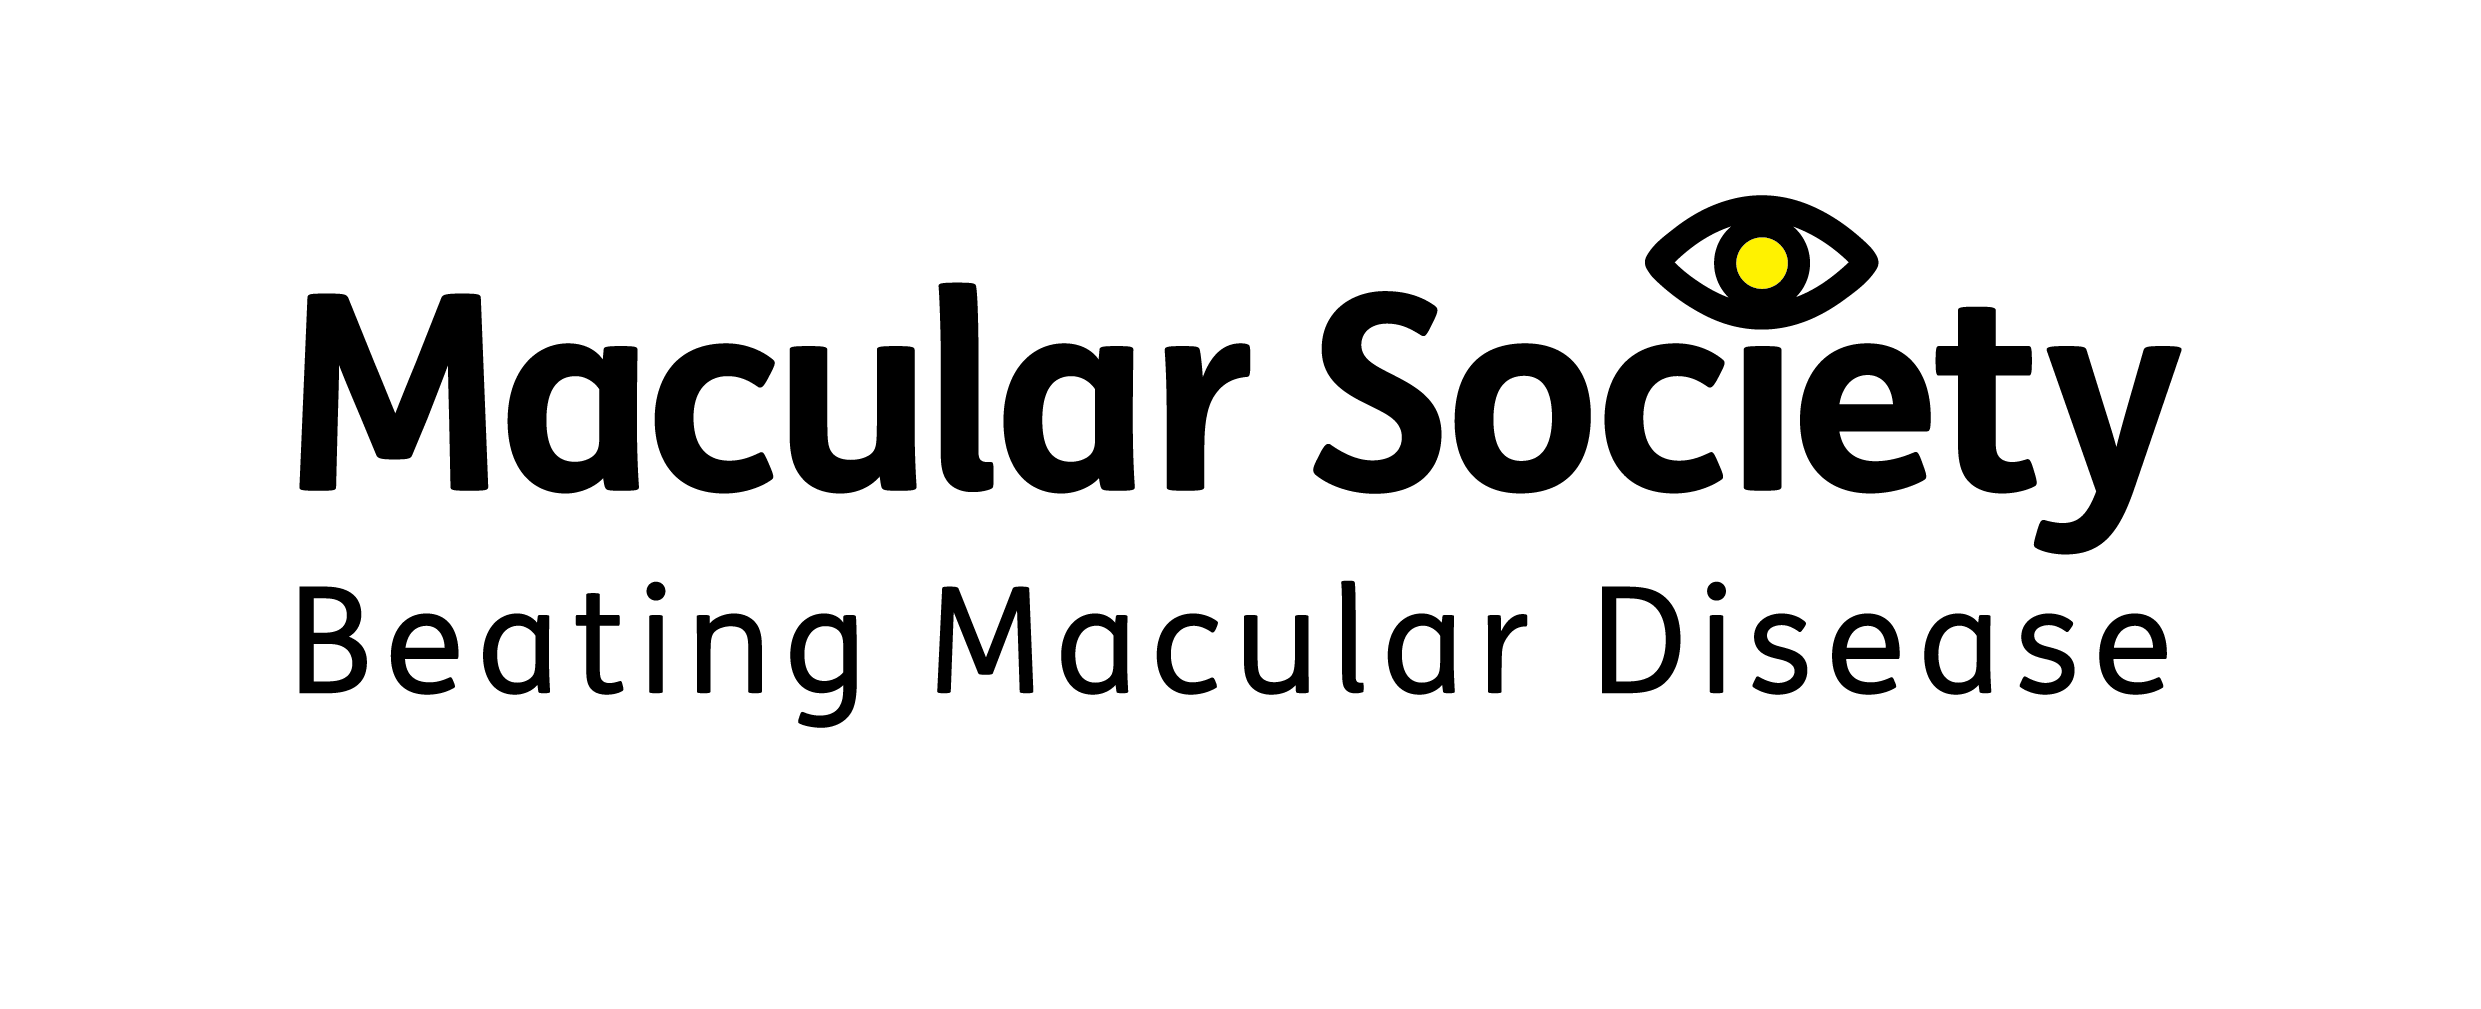 Macular Society logo with strapline "Beating Macular Disease".